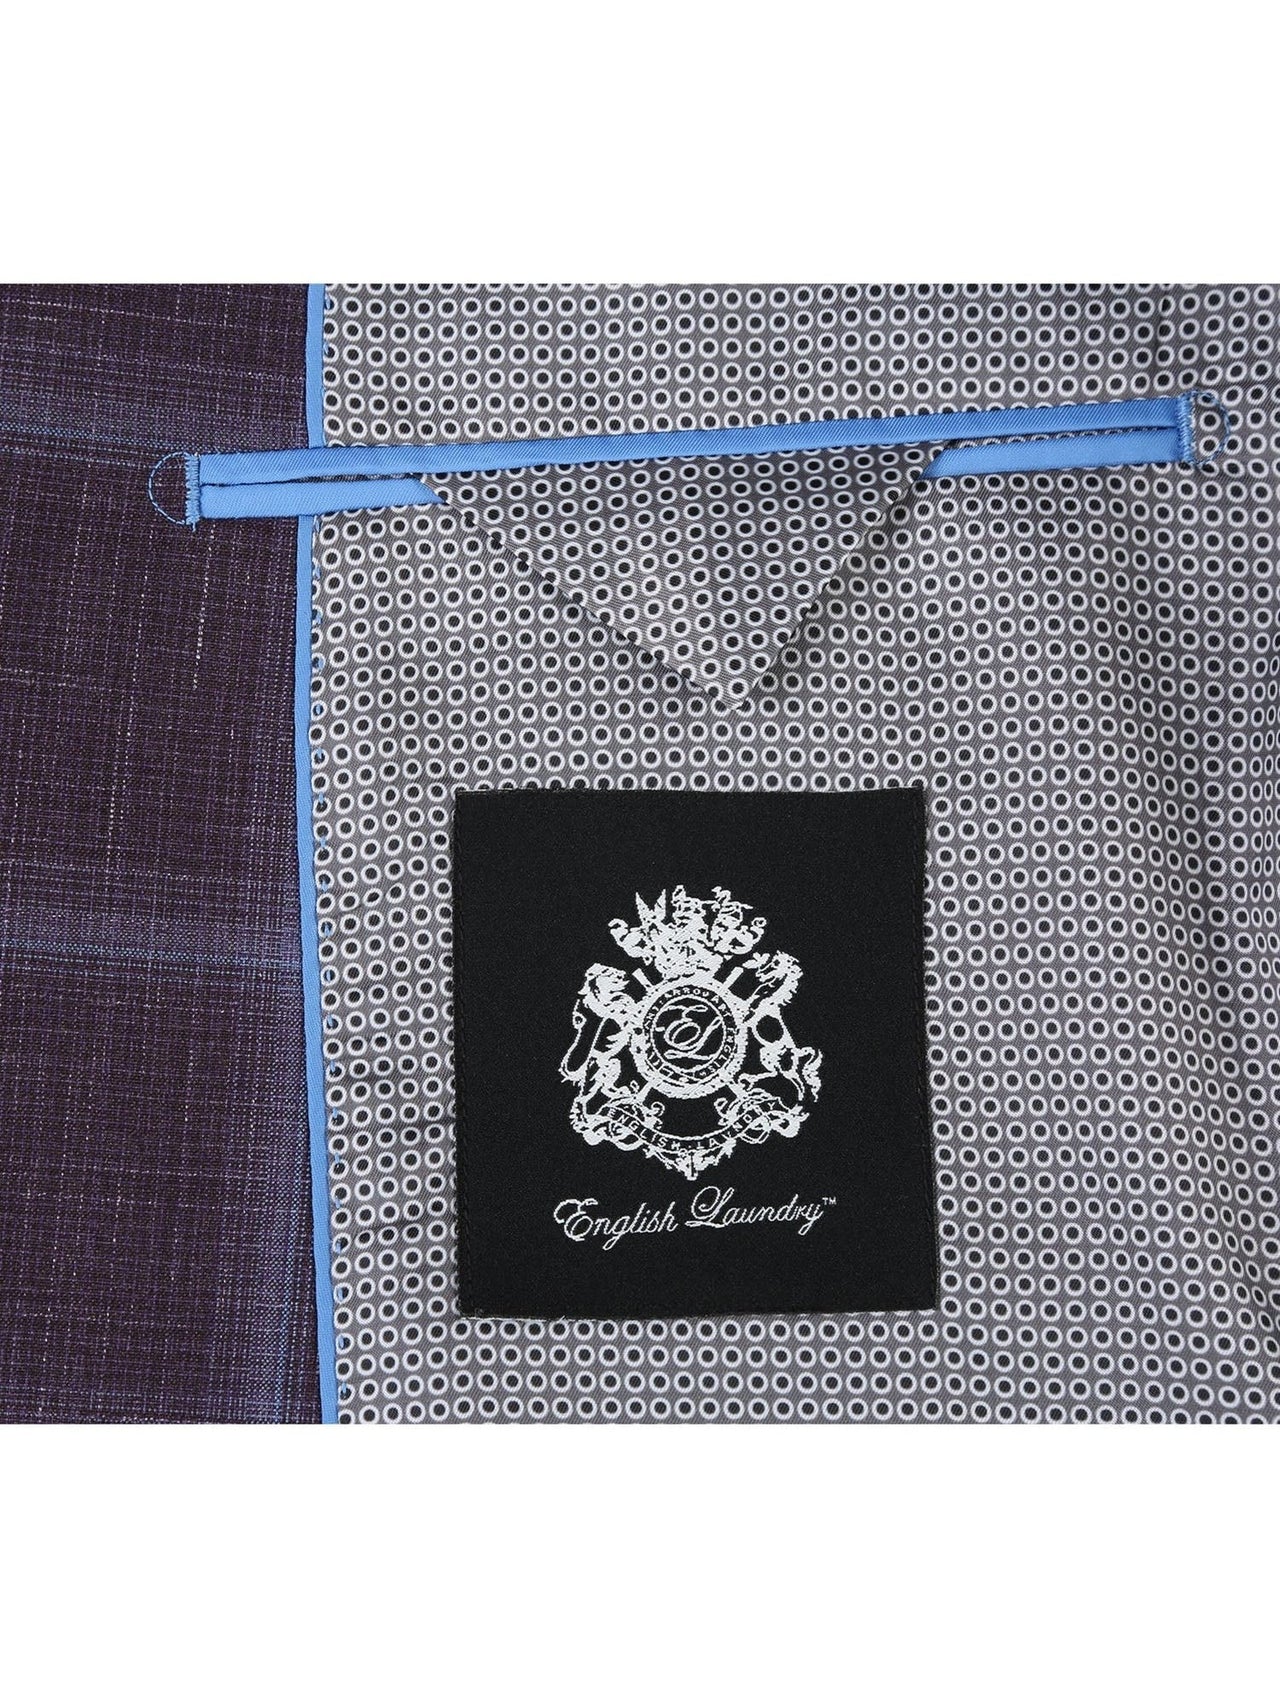 English Laundry Slim Fit Window Pane Check Wool Suit